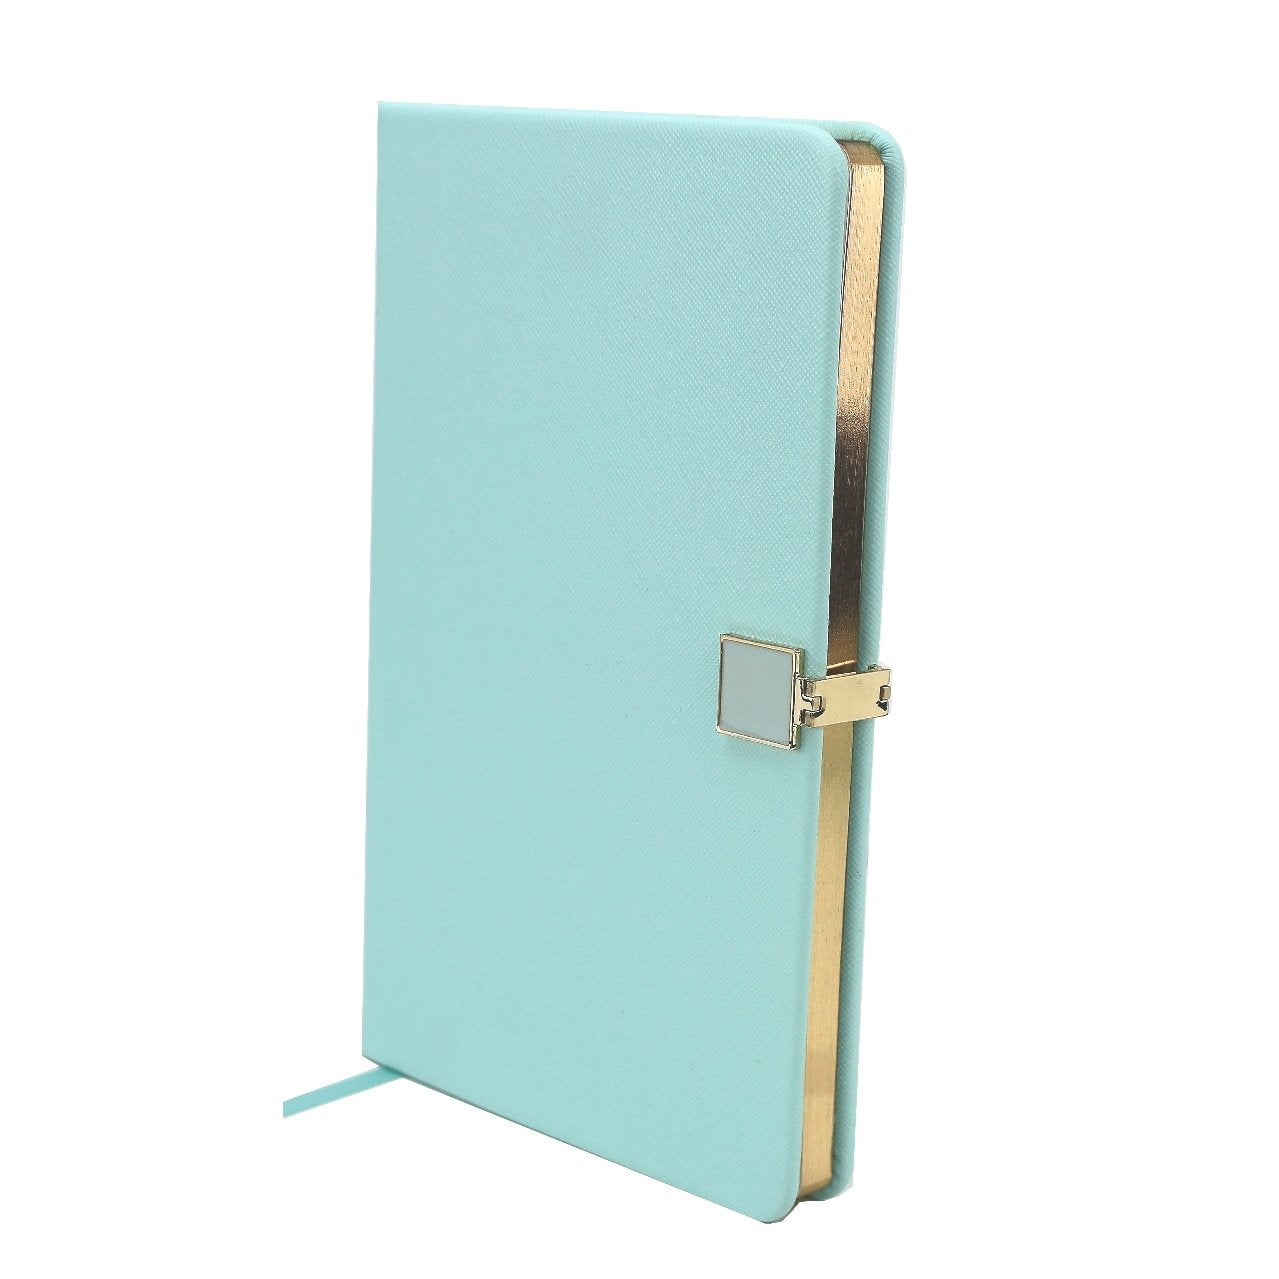 Mint & Gold Notebook - Notebooks - Addison Ross